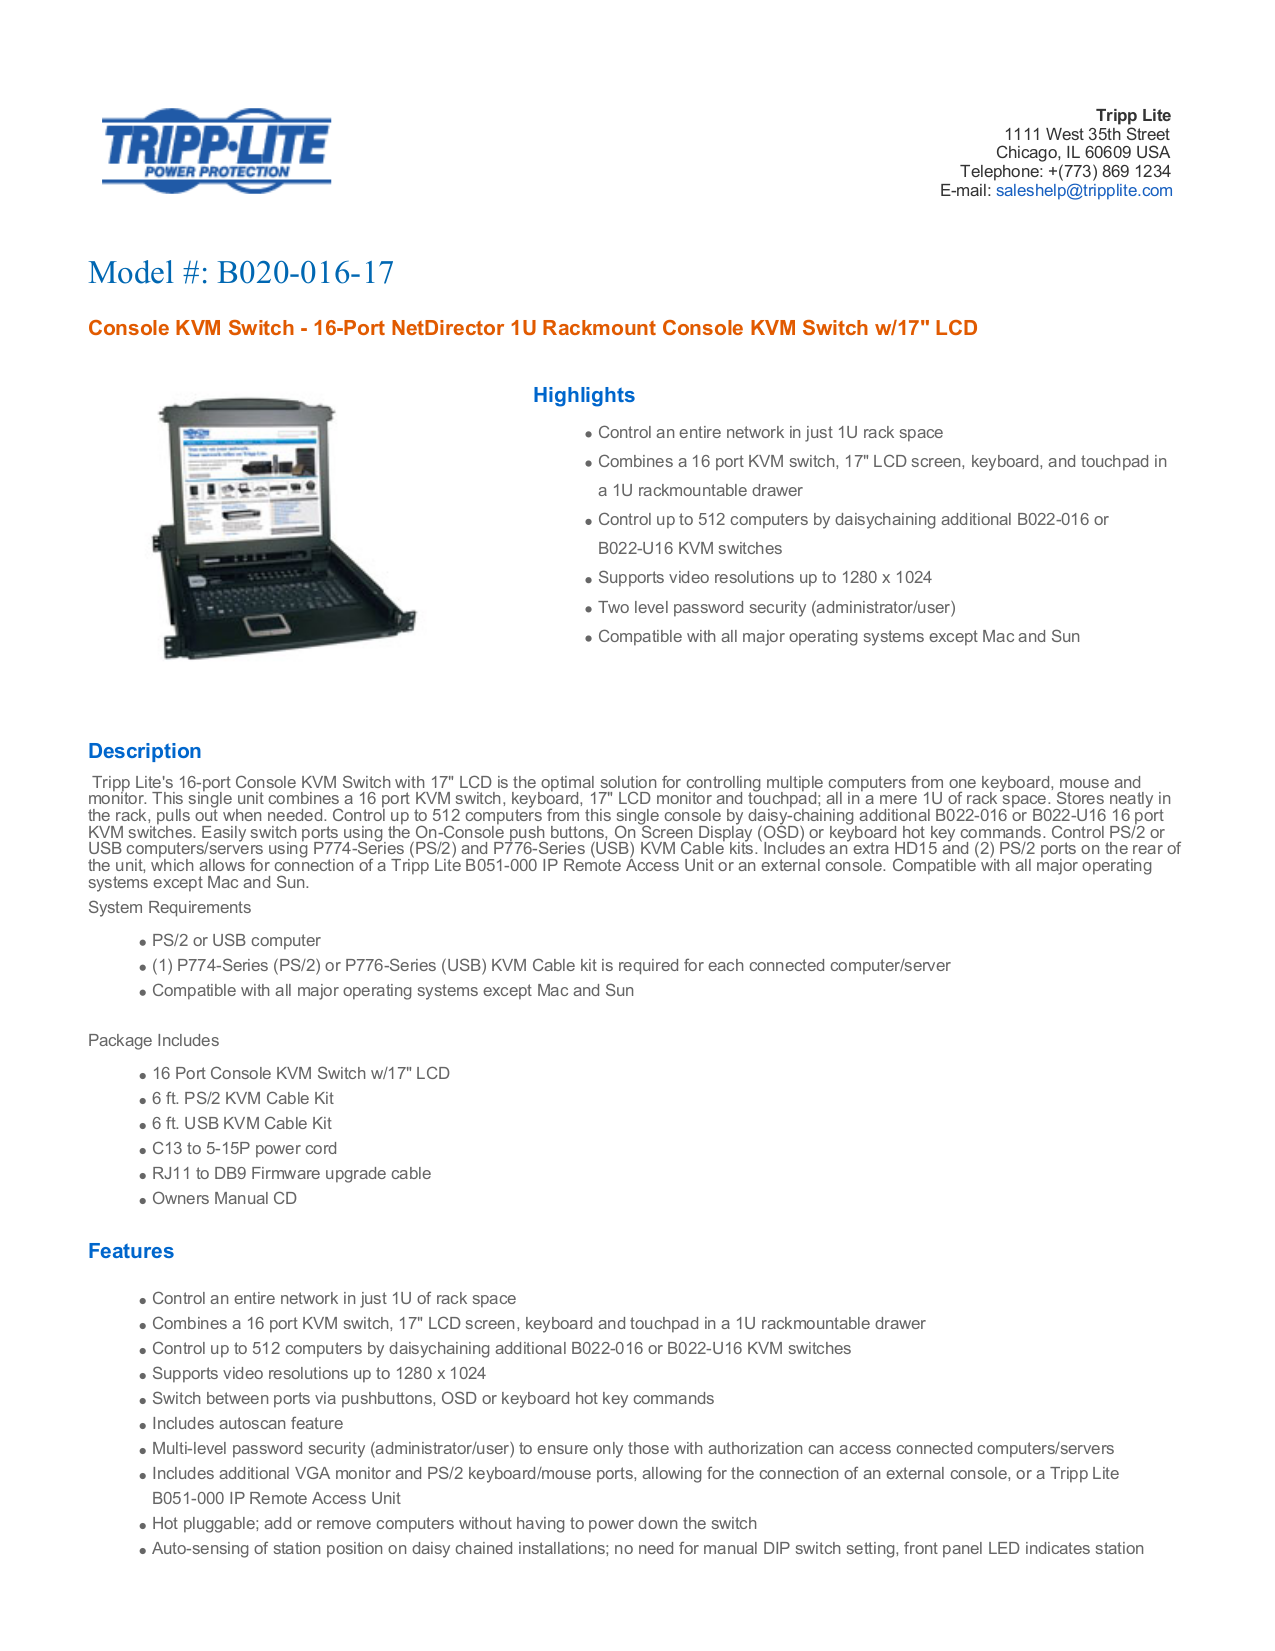 pdf for Tripp Switch B020-016-17-IP manual